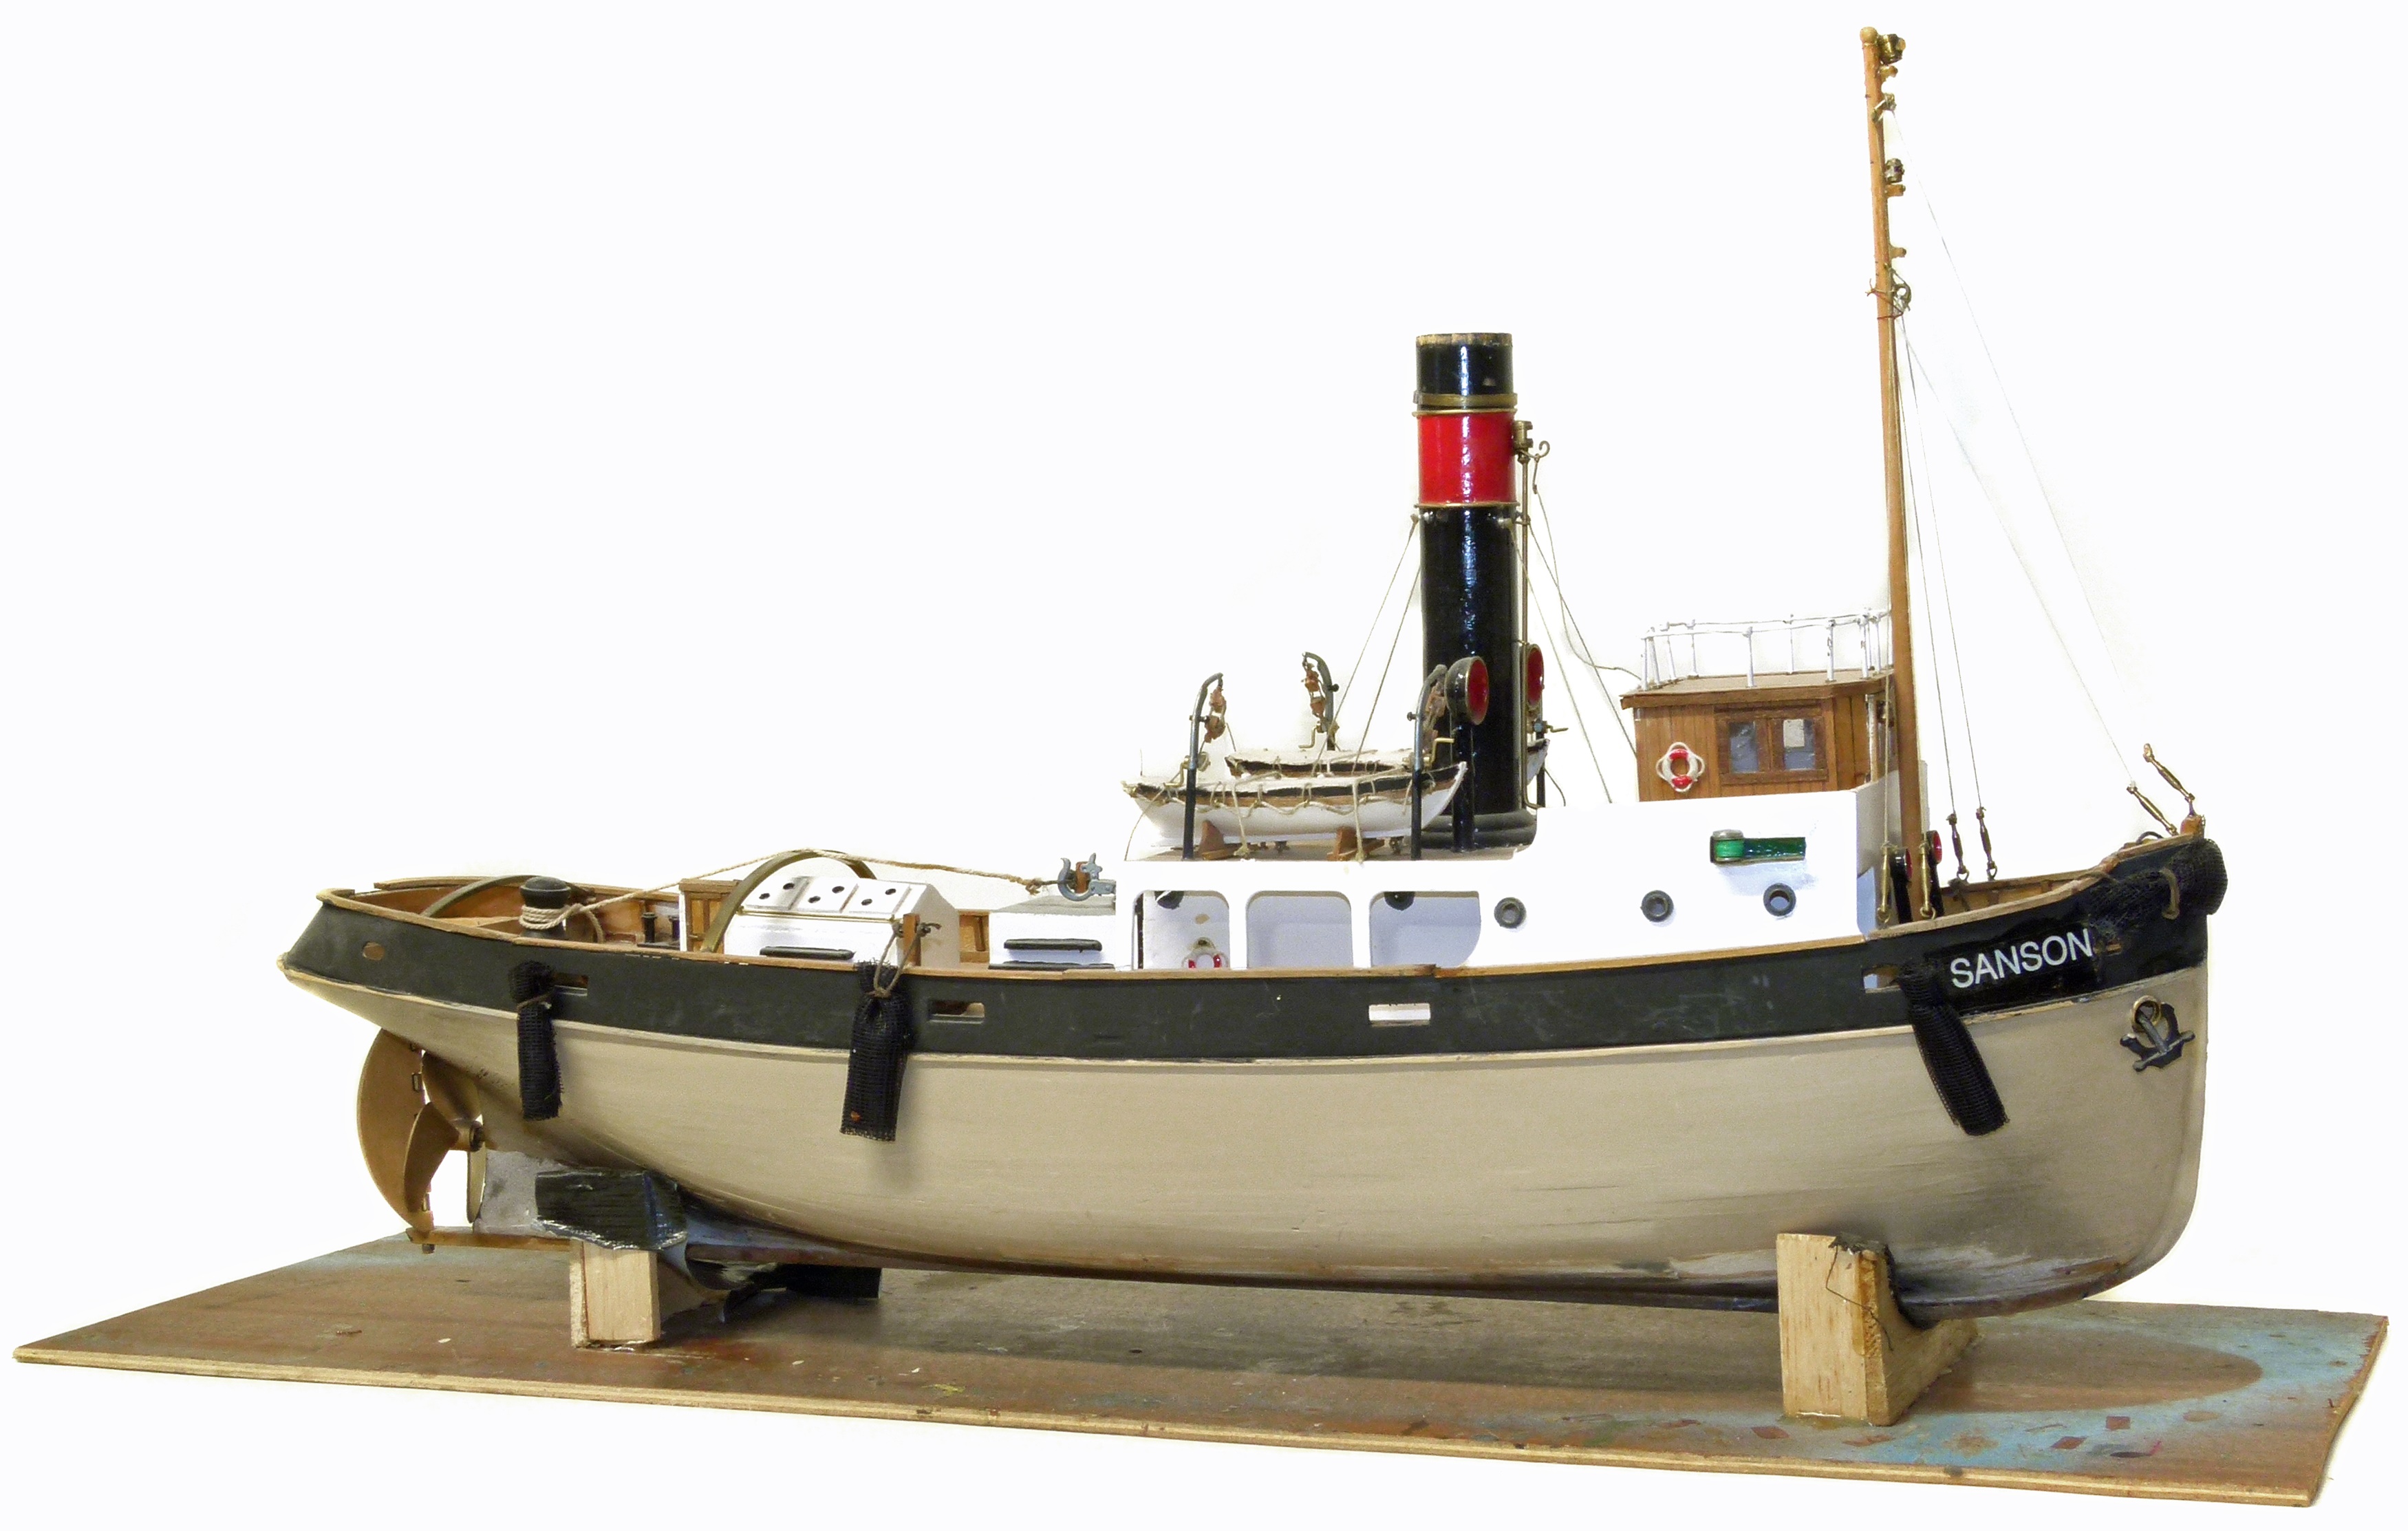 Scale model of a tug boat 'Sanson'.